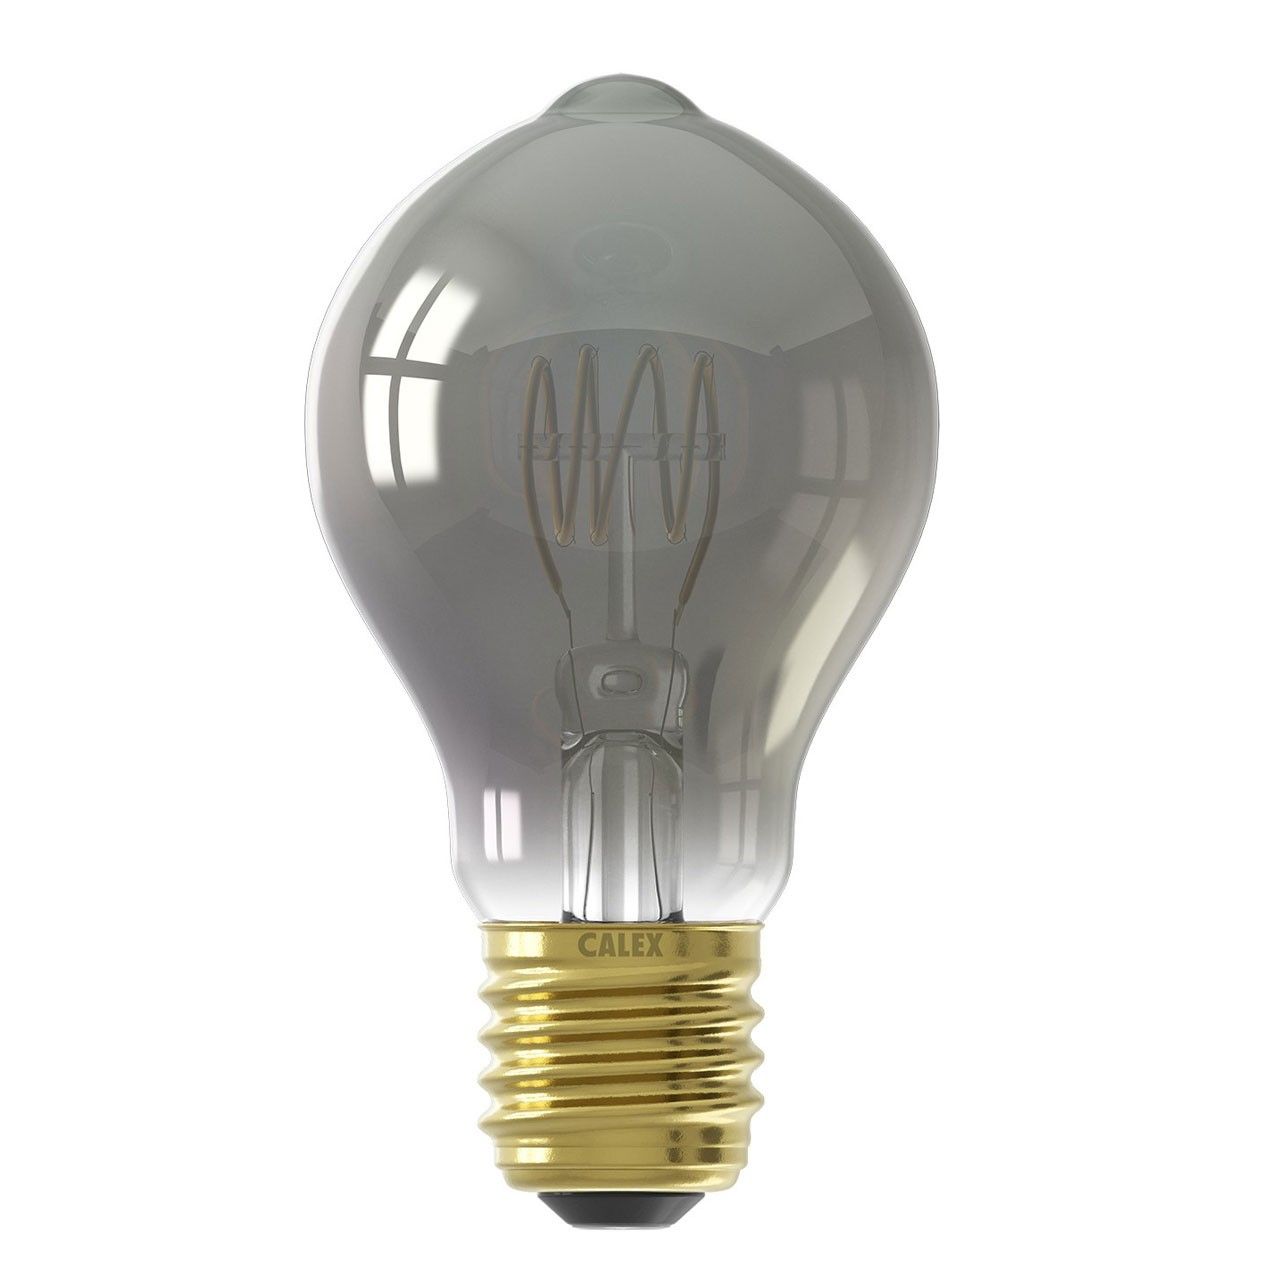 Calex LED Full Glass Flex Filament GLS-lamp 240V 4W 136lm E27 A60DR, Titanium 1800K Dimmable